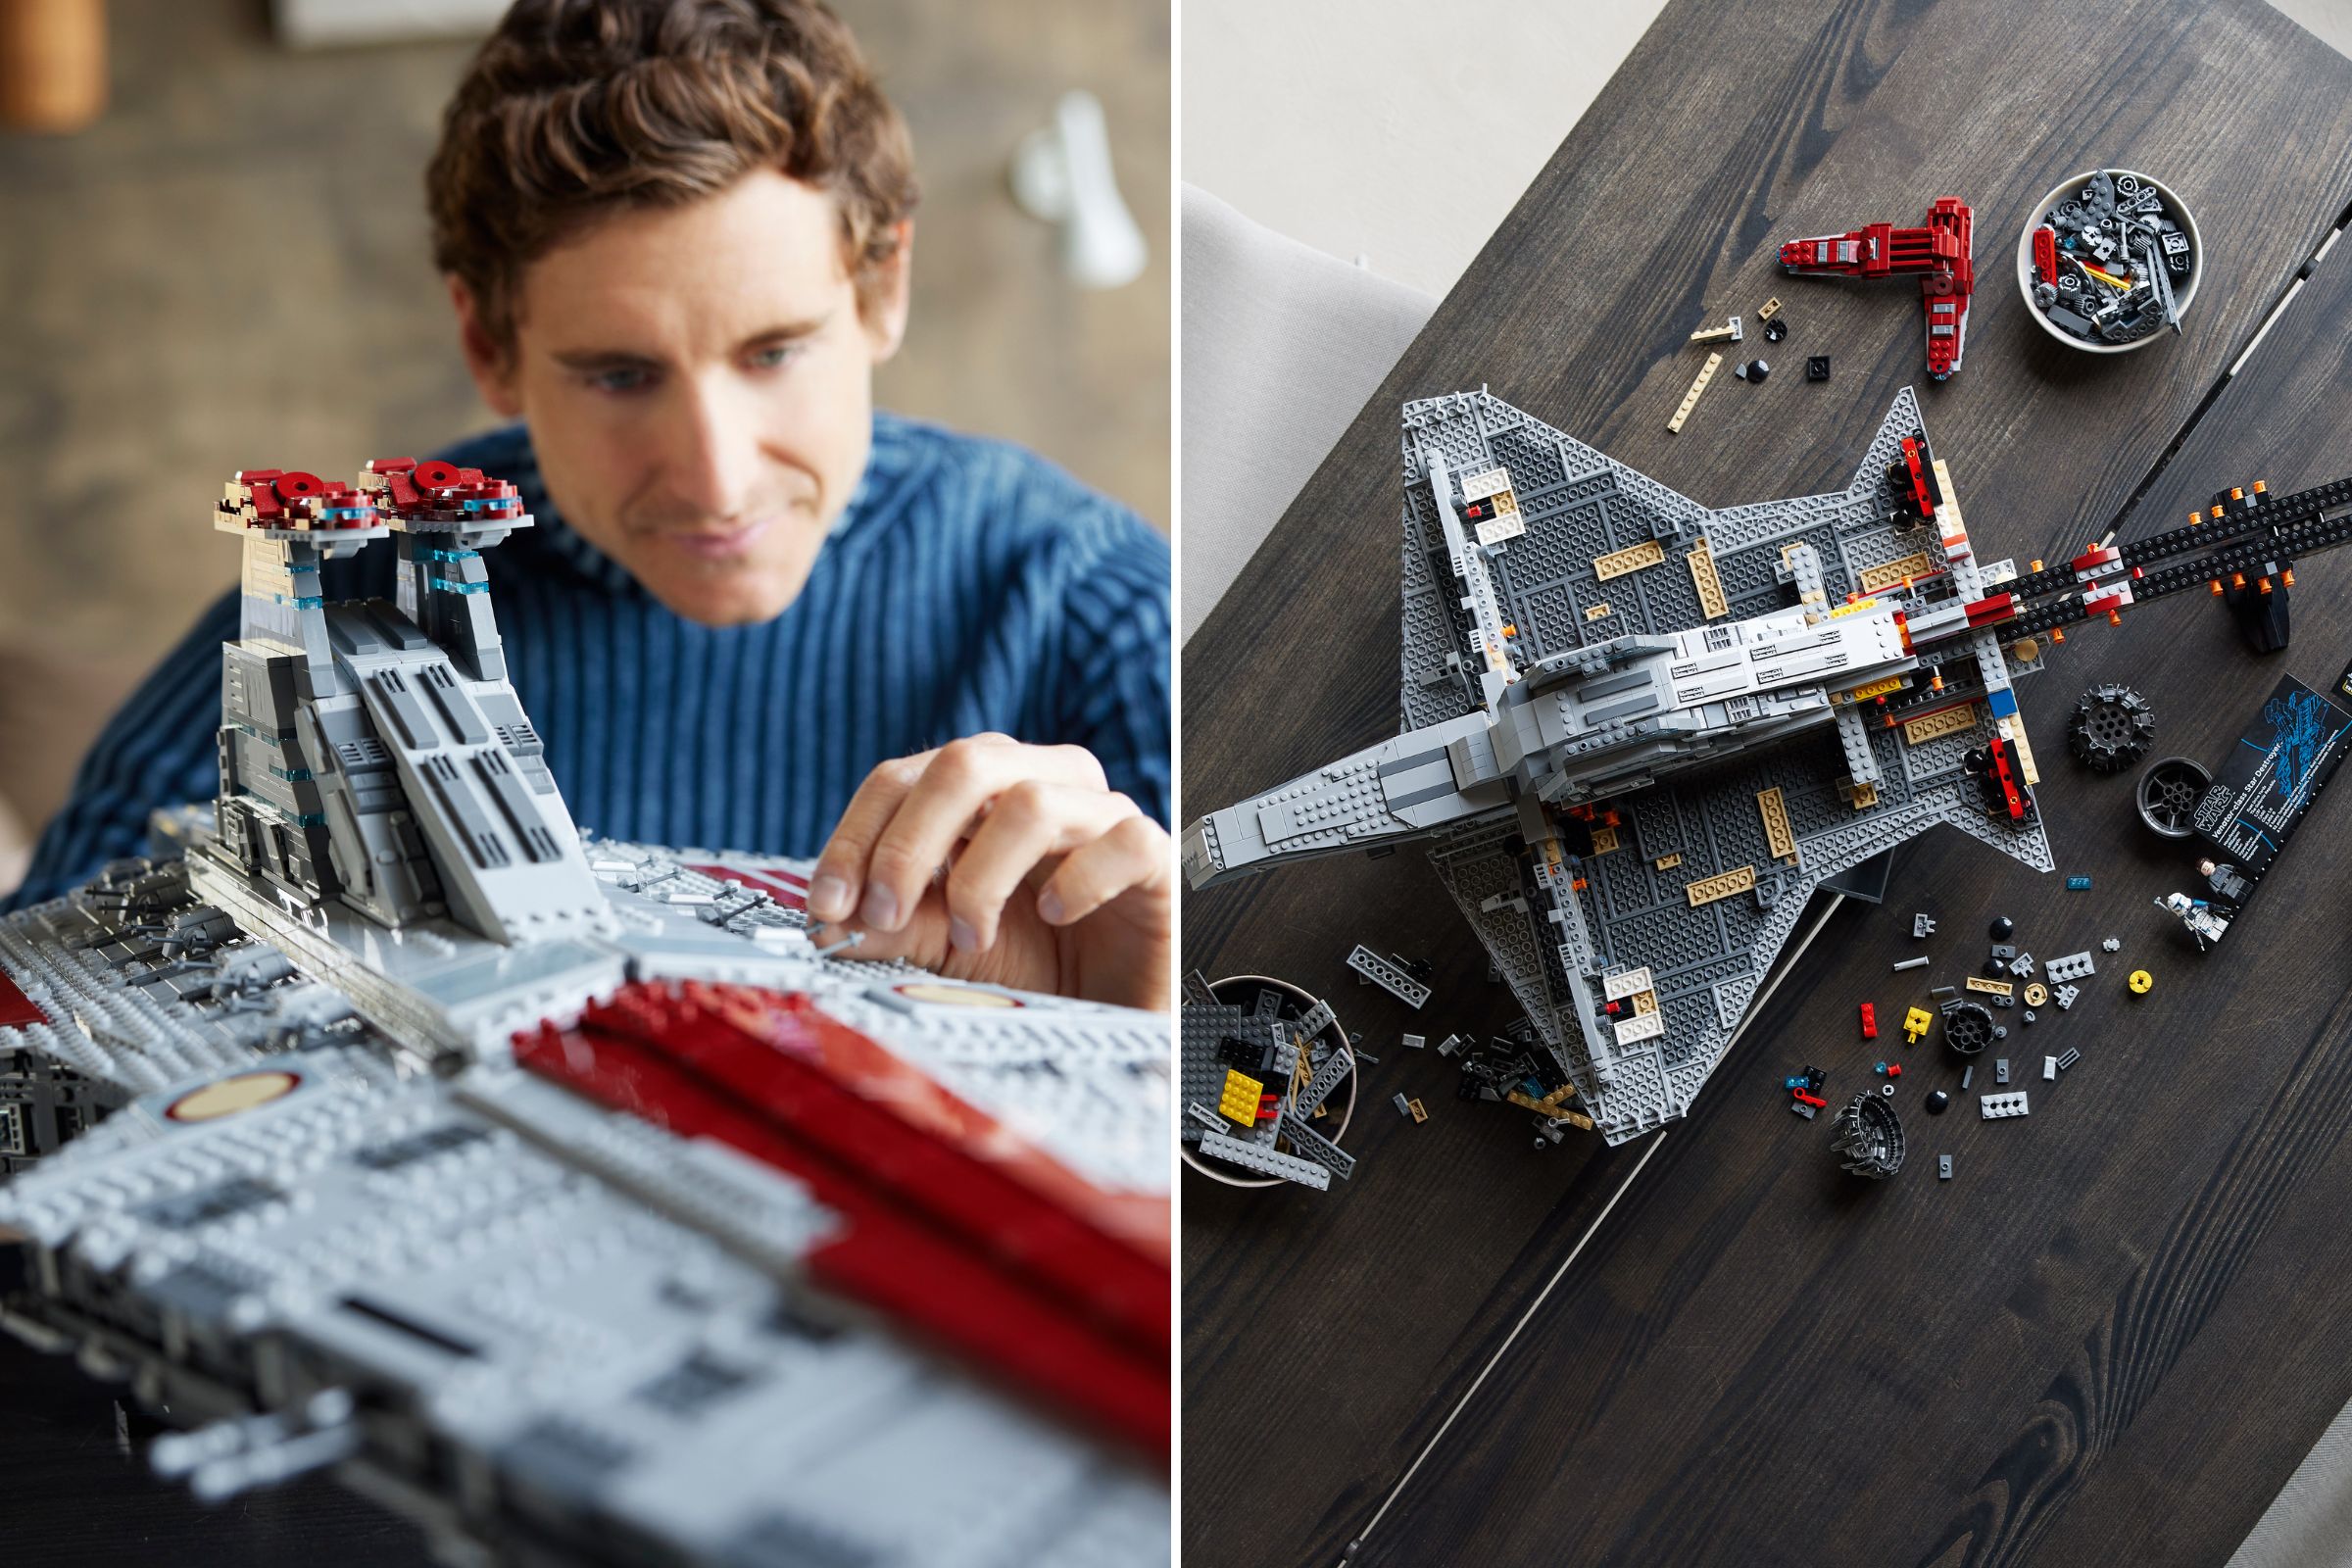 LEGO® Venator-class Republic Attack Cruiser 